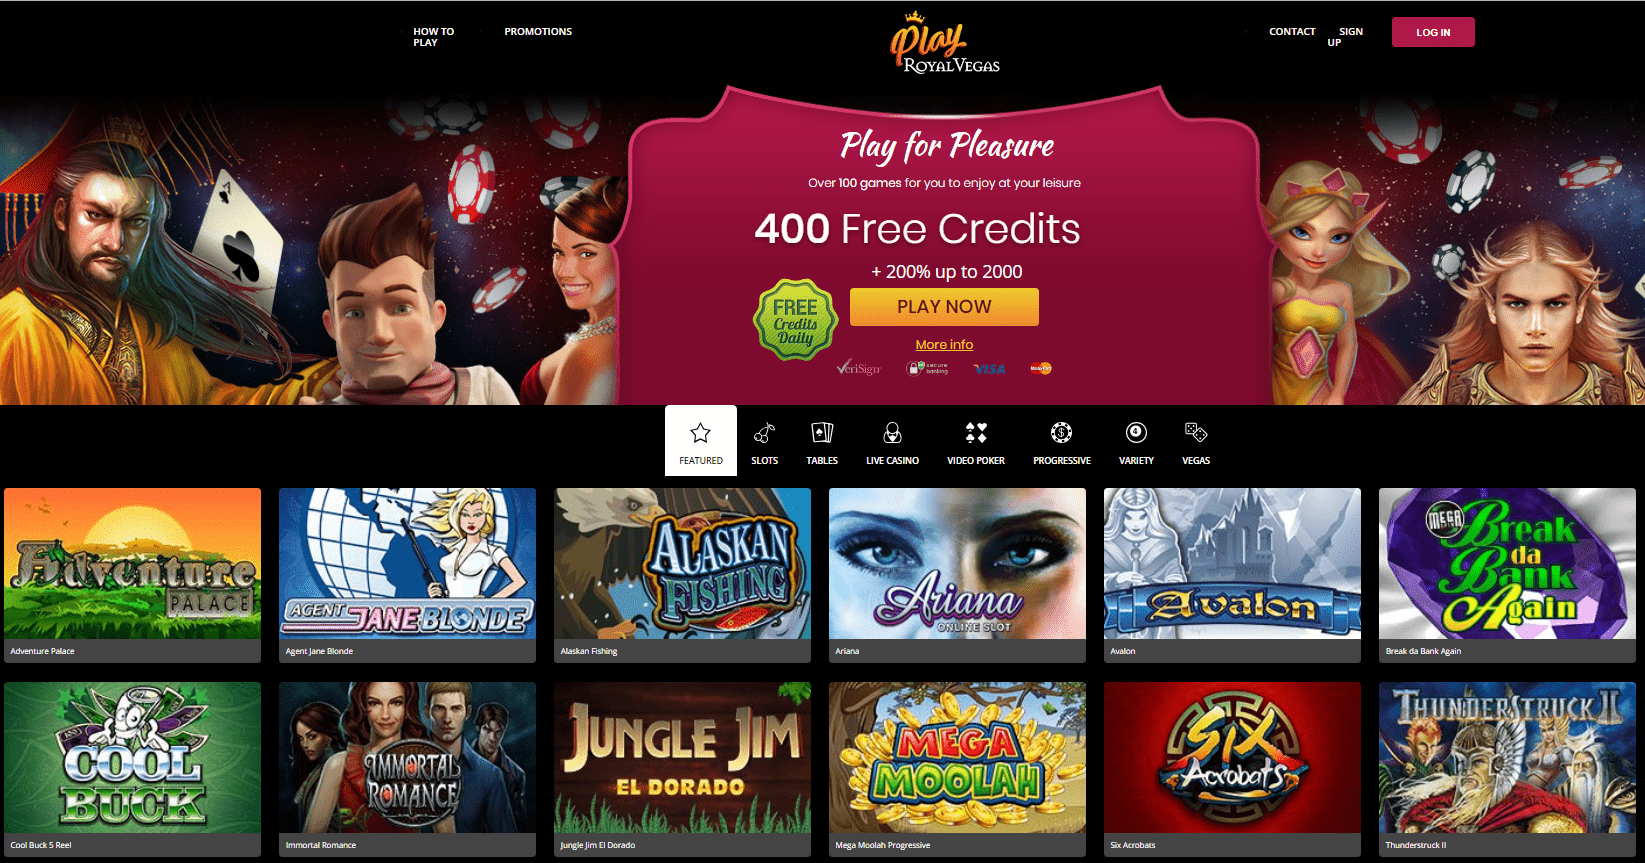 Royal Vegas fun casino homepage